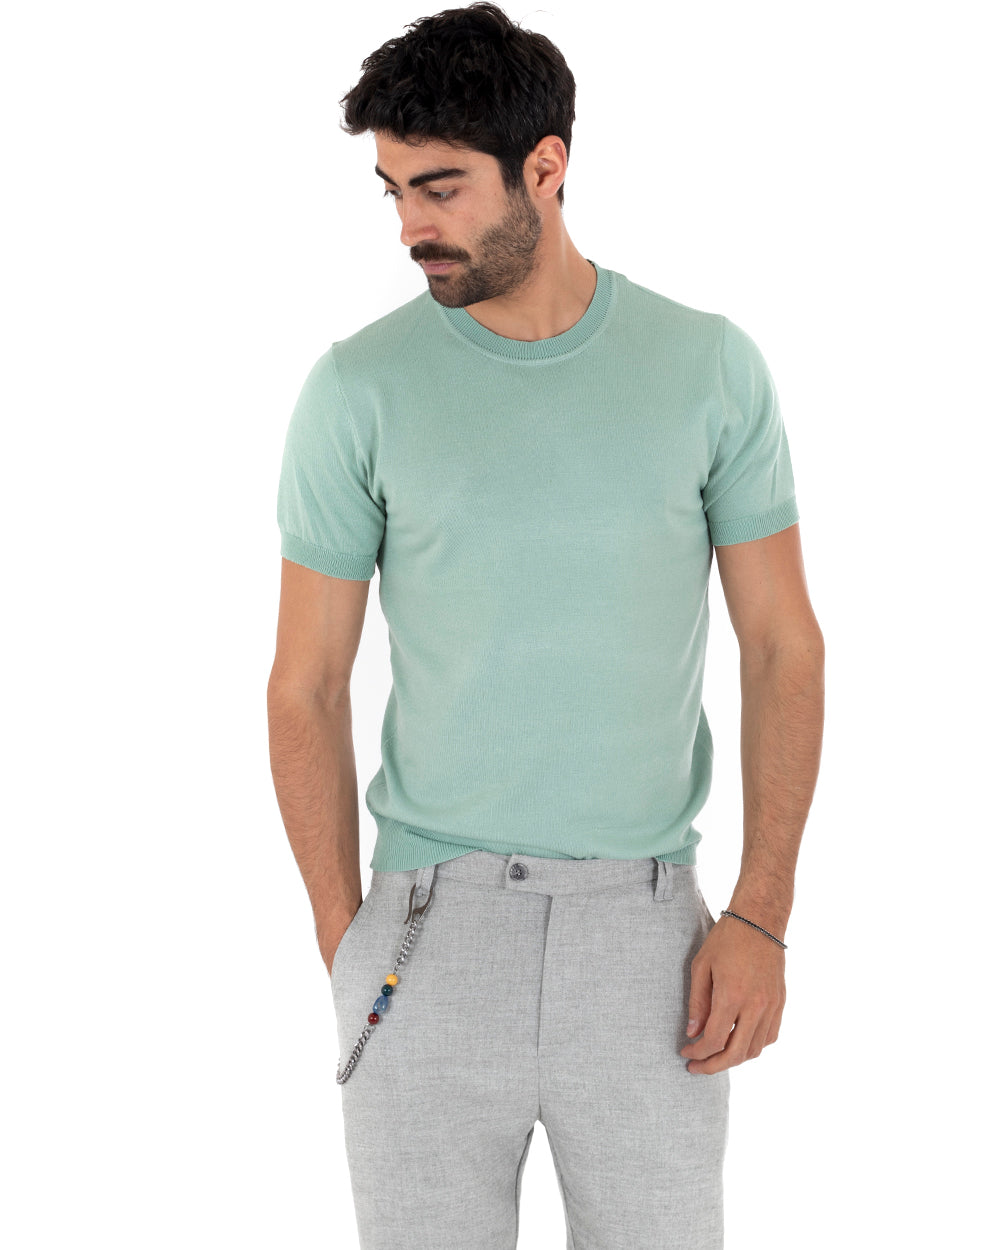 T-Shirt Uomo Maniche Corte Tinta Unita Verde Salvia Girocollo Filo Casual GIOSAL-TS3050A